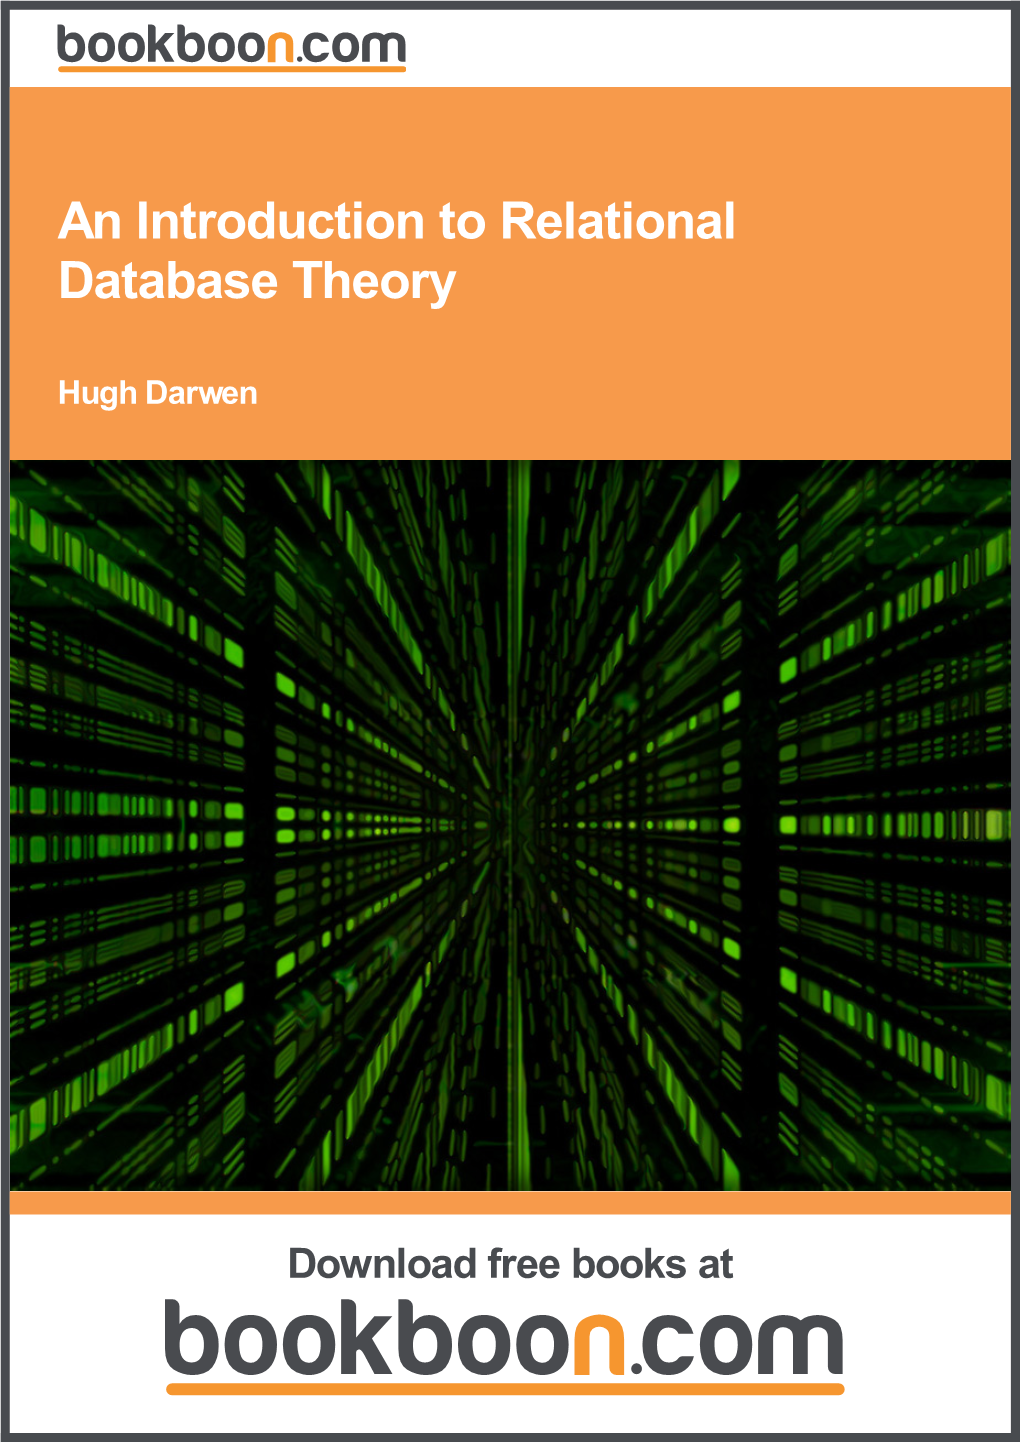 An Introduction to Relational Database Theory (Hugh Darwen)